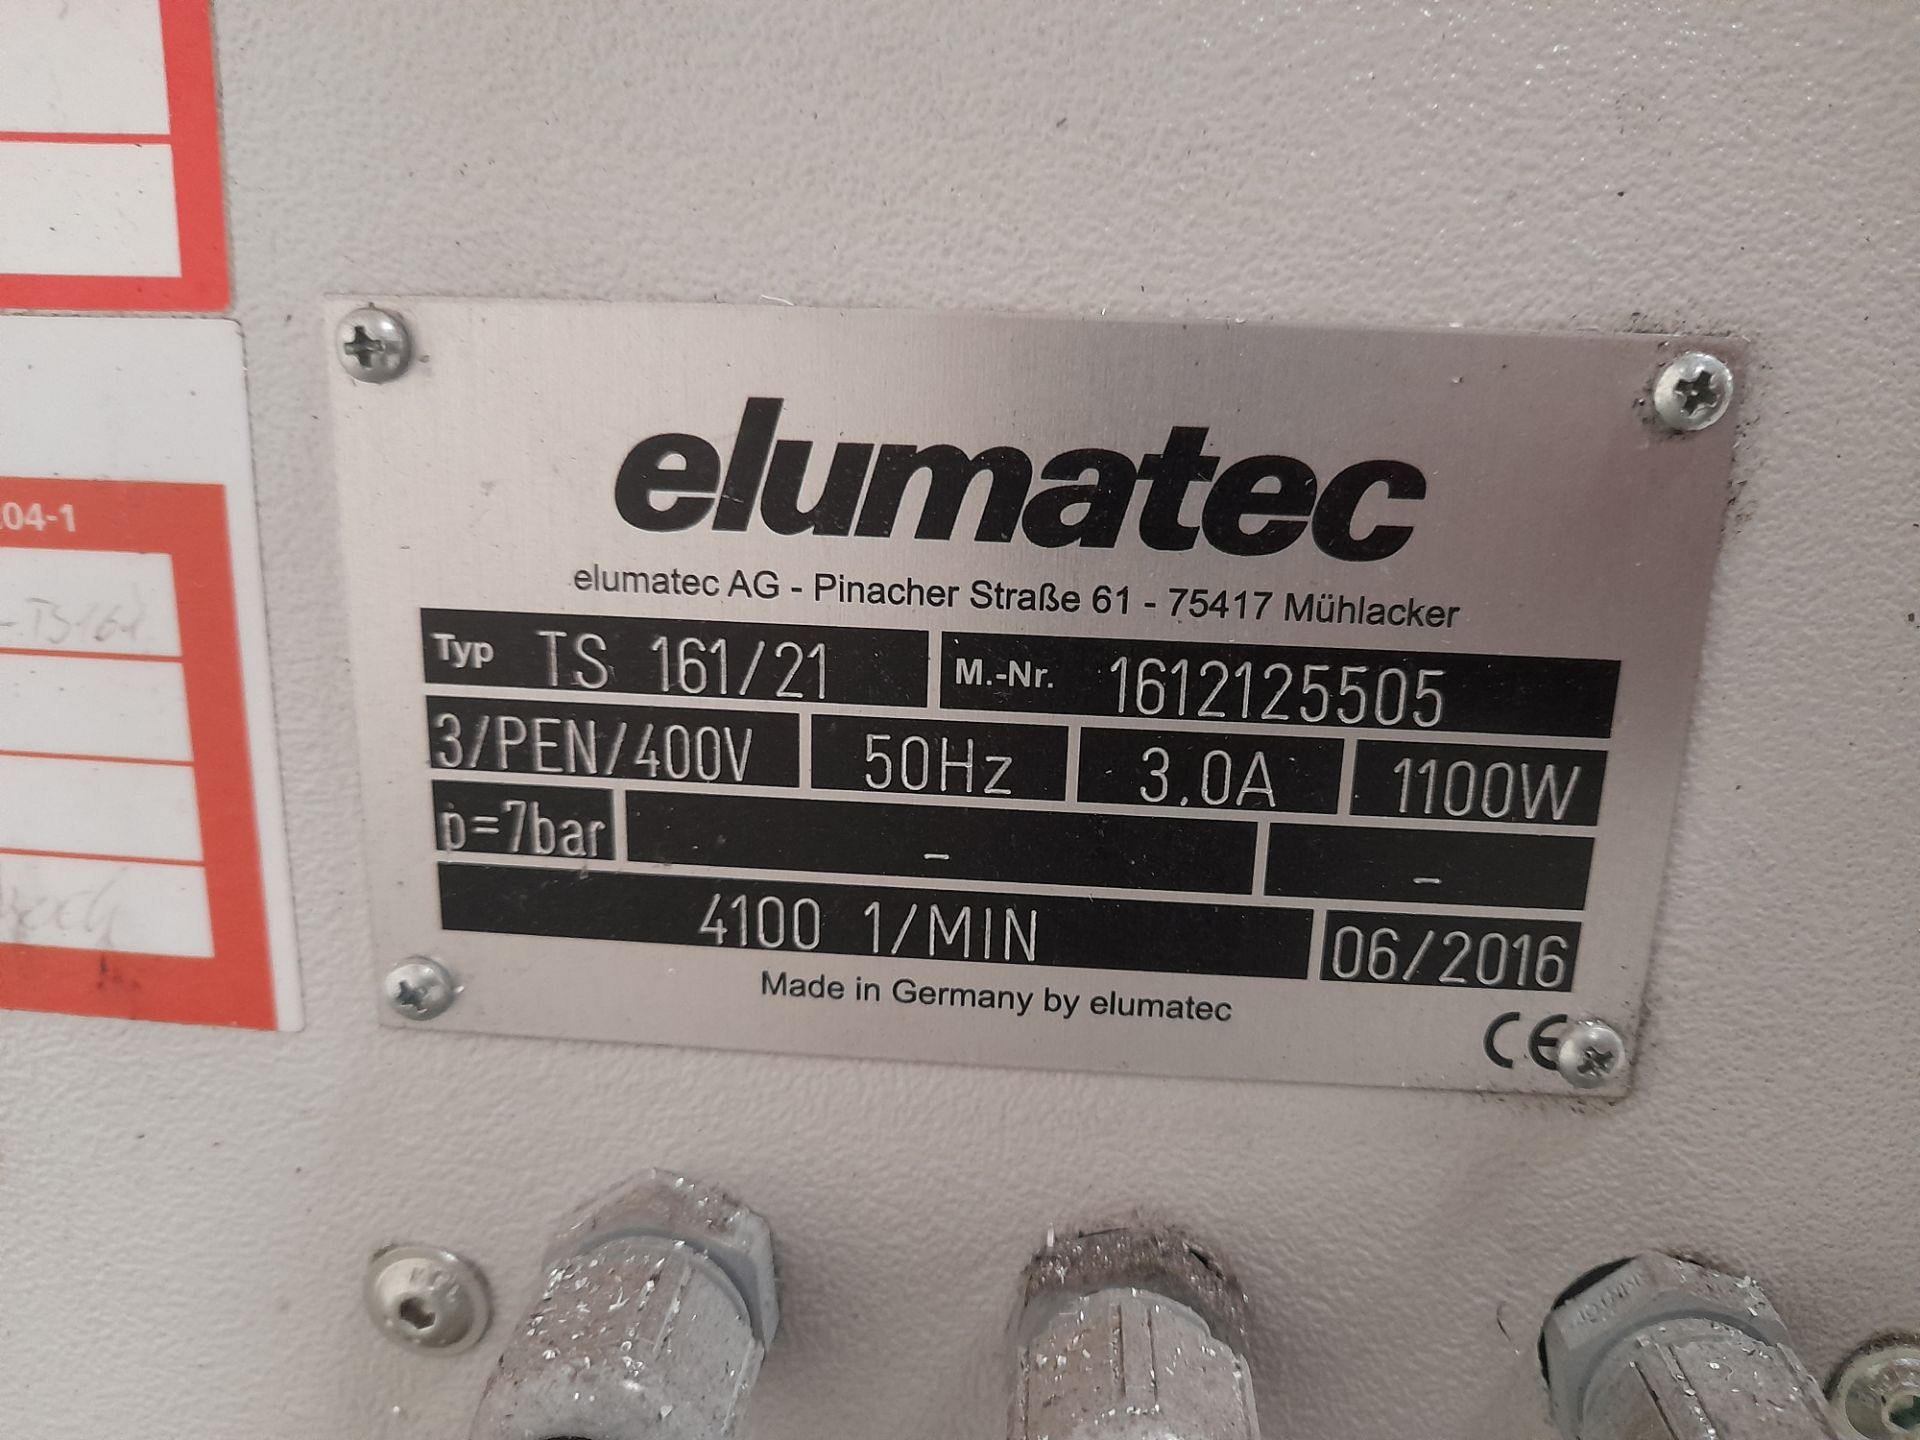 Elumatec TS161/21 Upstroking mitre bead saw 06/2016 Serial Number 1612125505 - Image 5 of 6